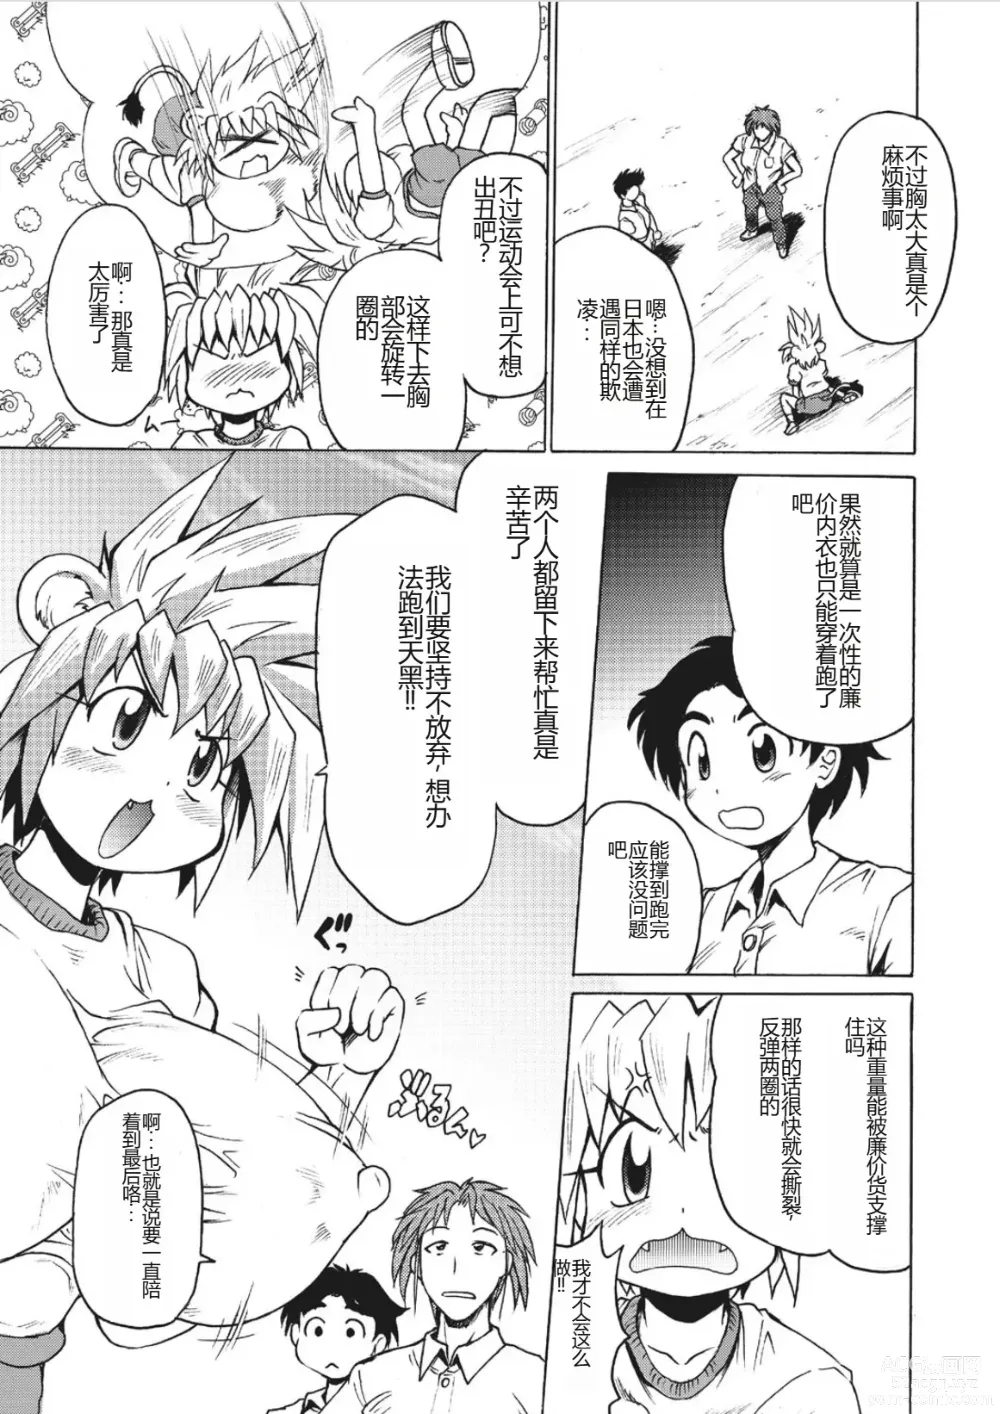 Page 23 of manga Lion Heart